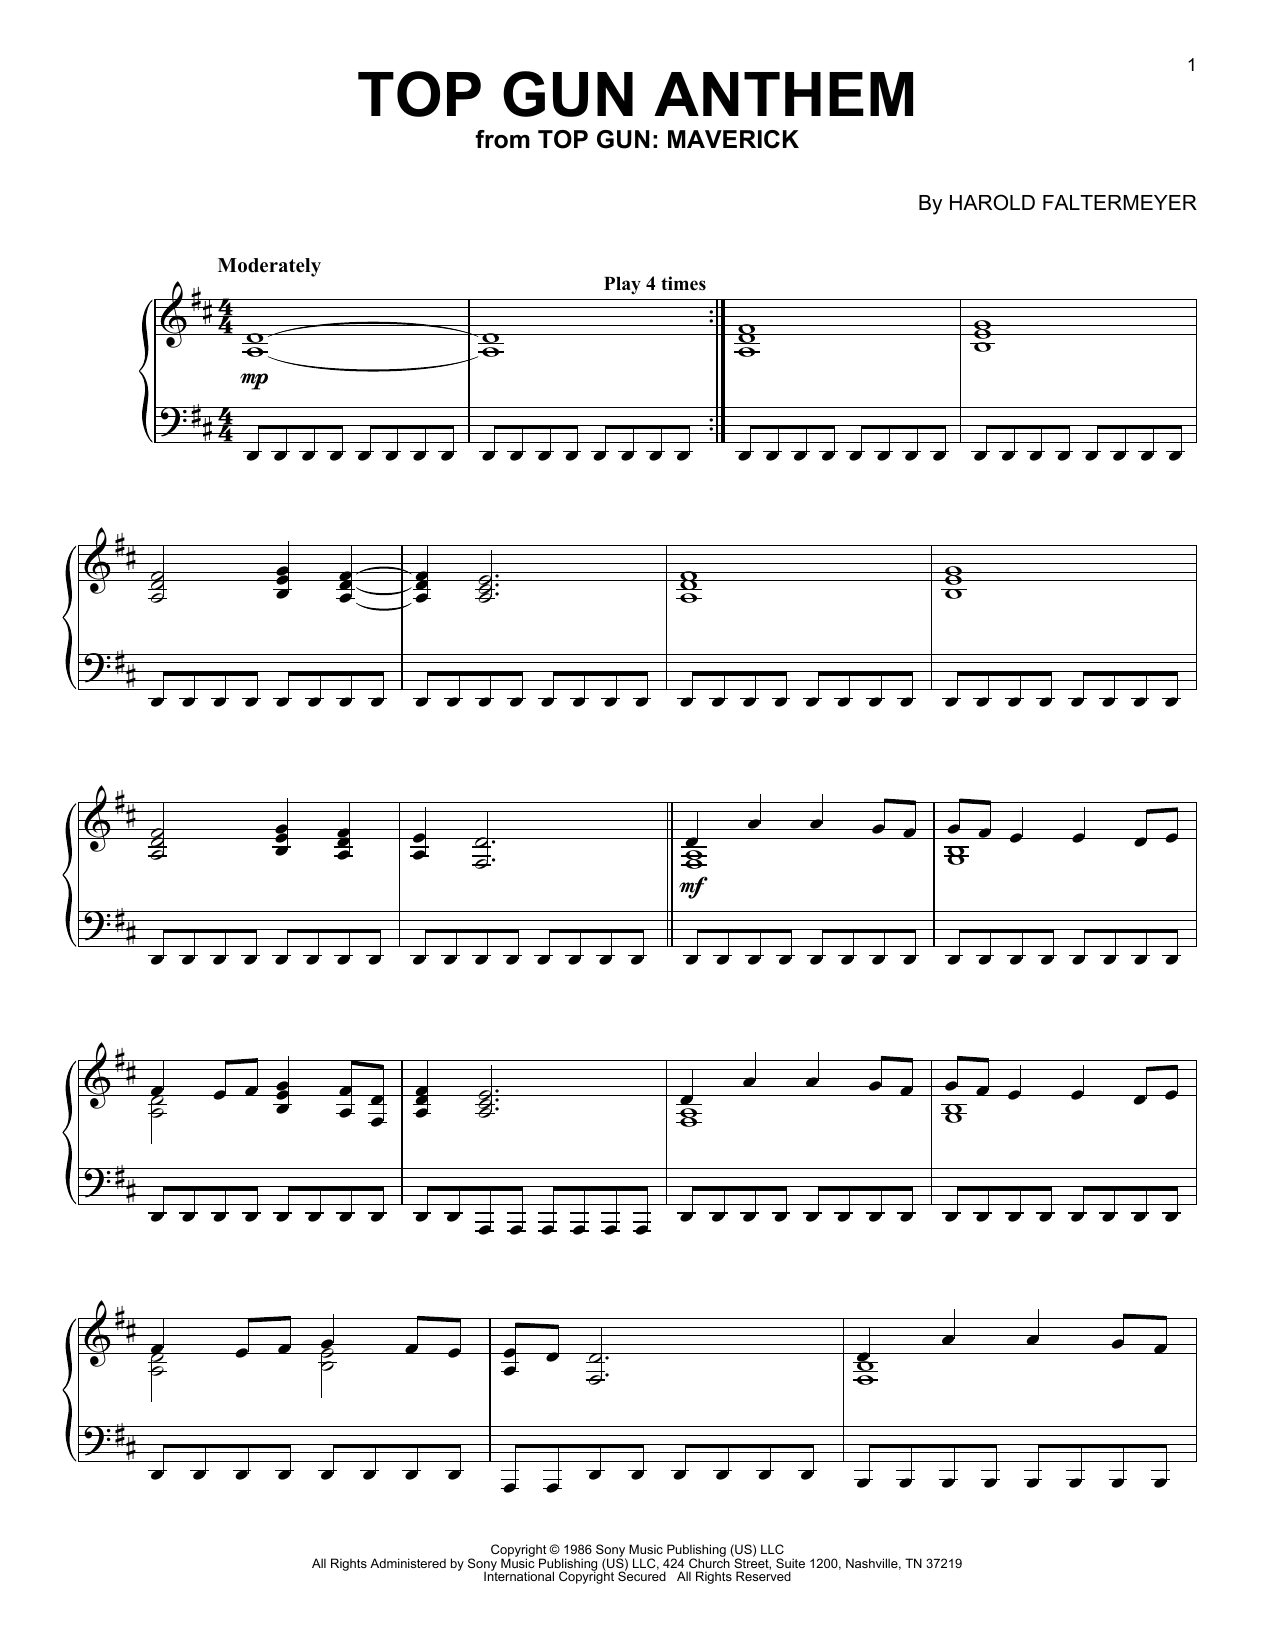 Harold Faltermeyer "Top Gun Anthem (from Top Gun: Maverick)" Sheet